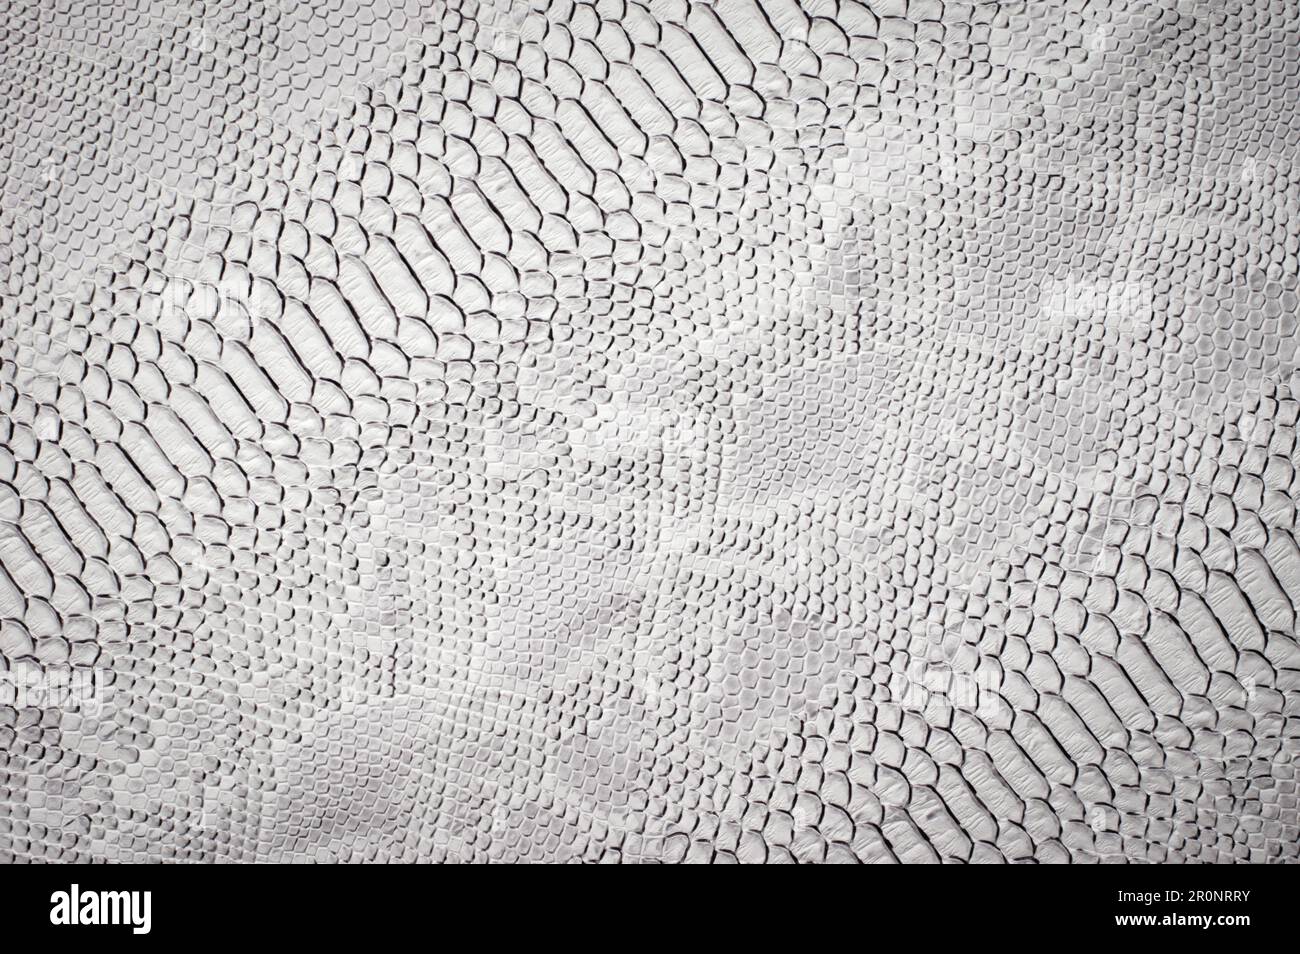 https://c8.alamy.com/comp/2R0NRRY/vegan-faux-snakeskin-leather-texture-minimalist-and-elegant-textile-simple-white-backdrop-2R0NRRY.jpg